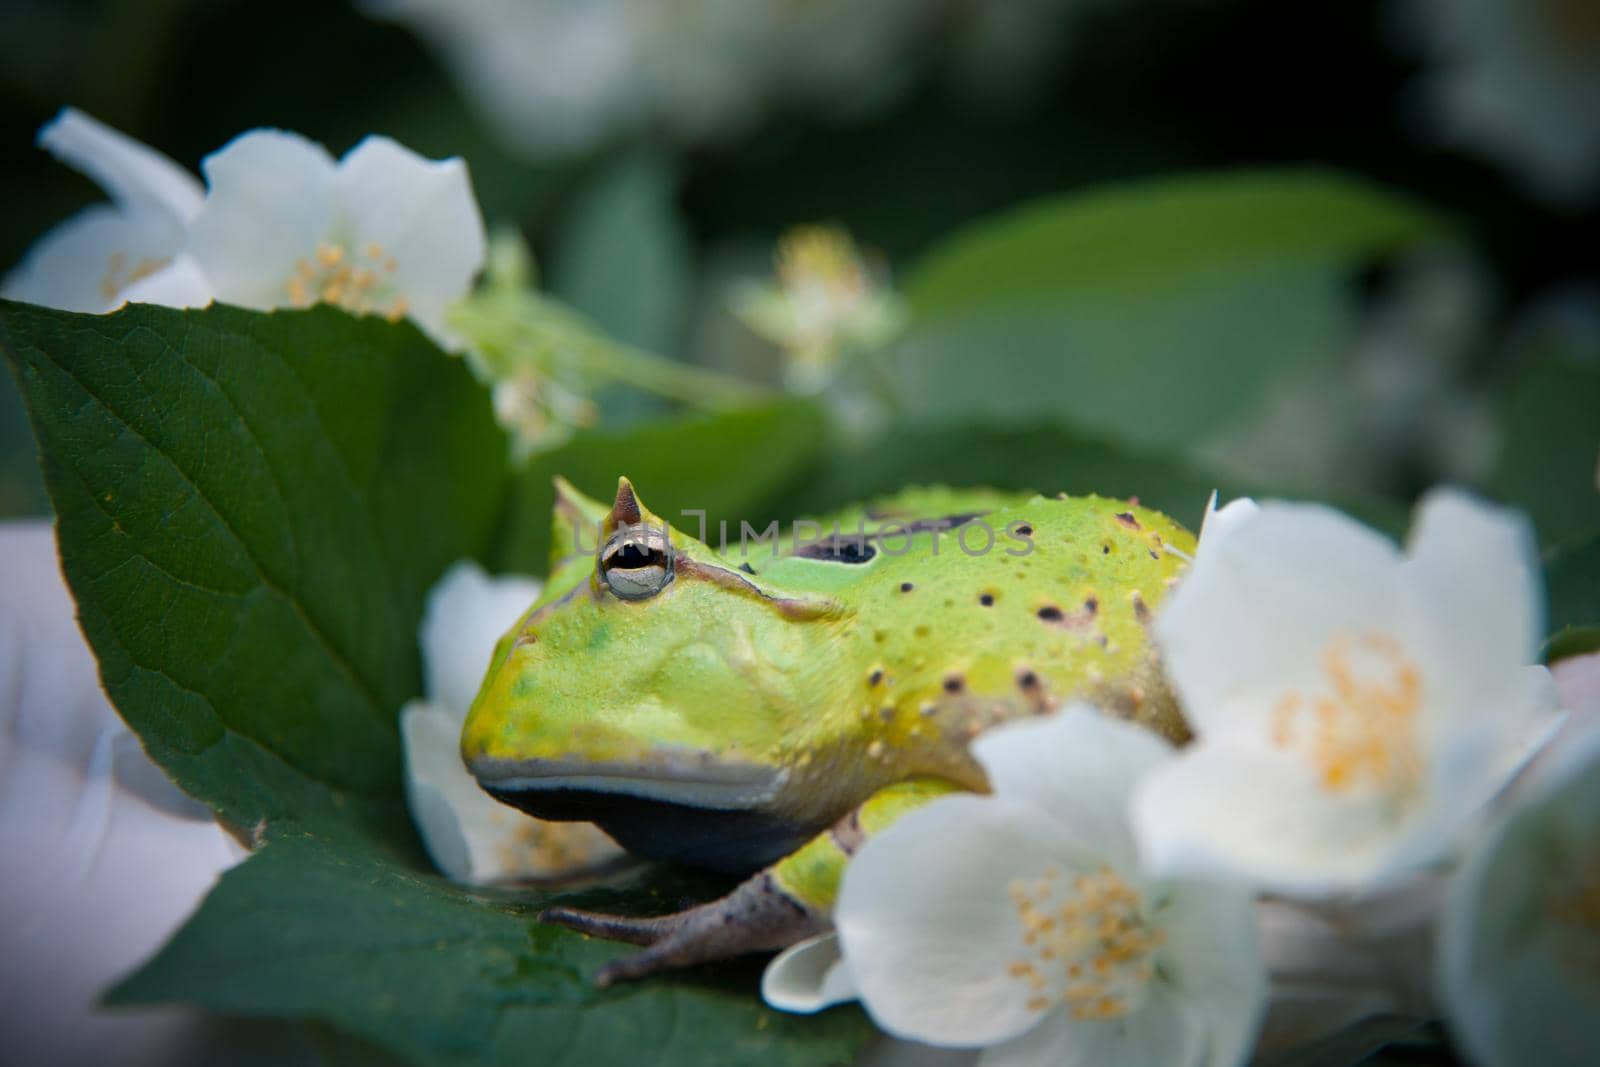 The Surinam horned frog with philadelphus flower bush by RosaJay